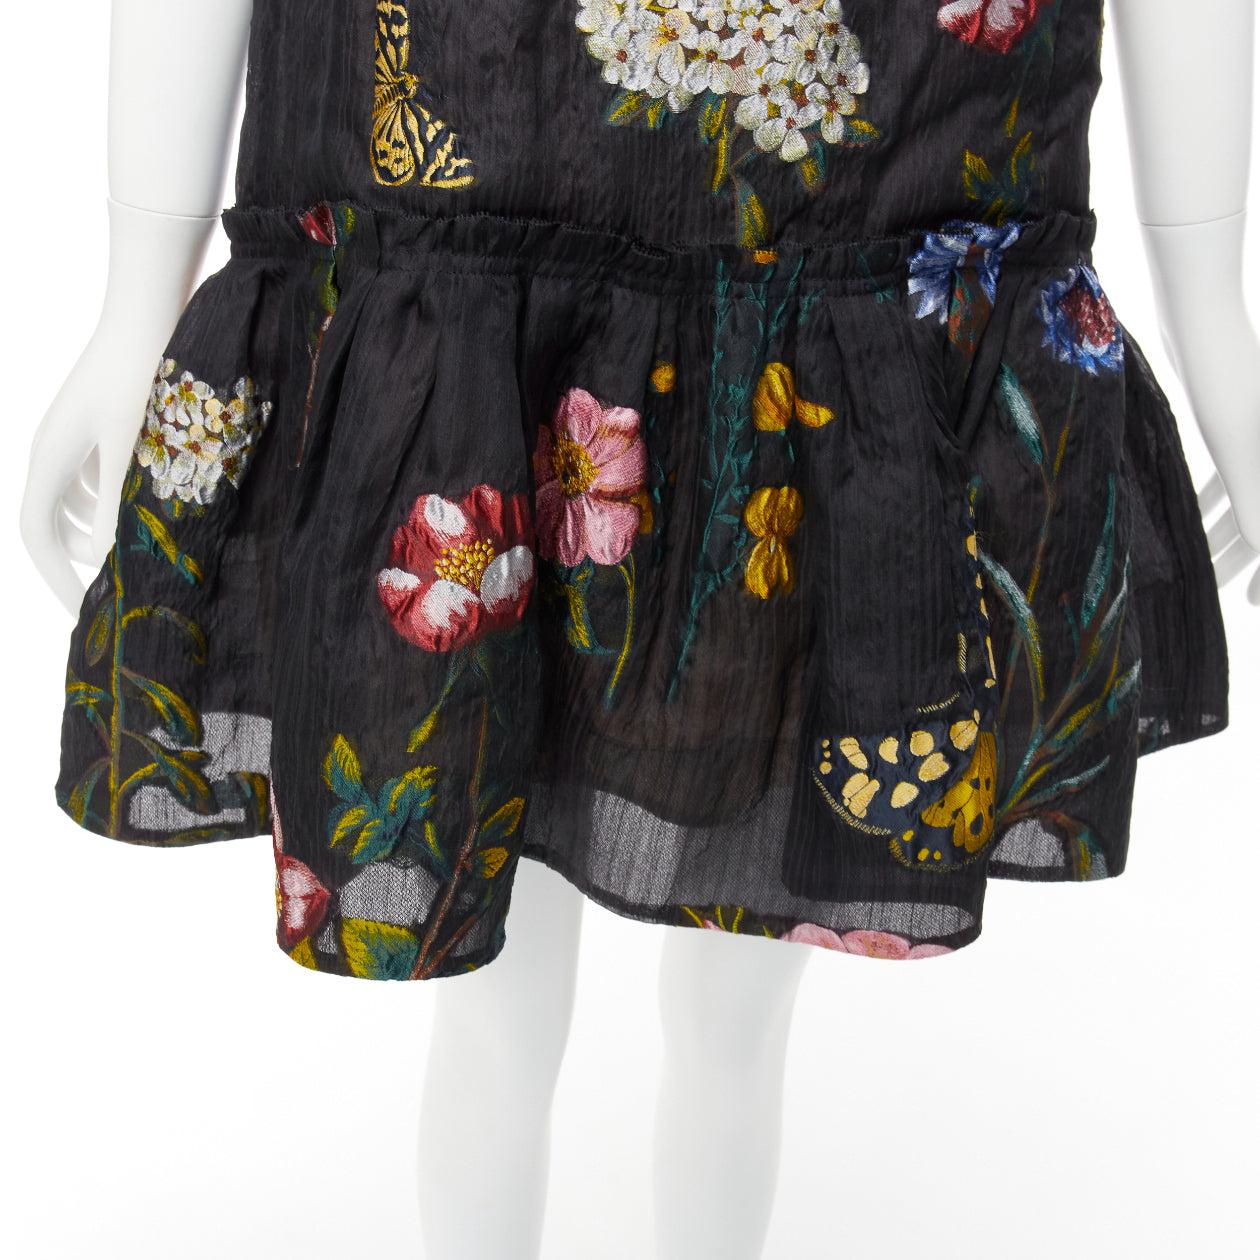 OSCAR DE LA RENTA 2020 Runway black floral jacquard mini dress US0 XS
Reference: LNKO/A02277
Brand: Oscar de la Renta
Designer: Oscar De La Renta
Collection: SS2020 - Runway
Material: Silk, Blend
Color: Black, Multicolour
Pattern: Floral
Closure: